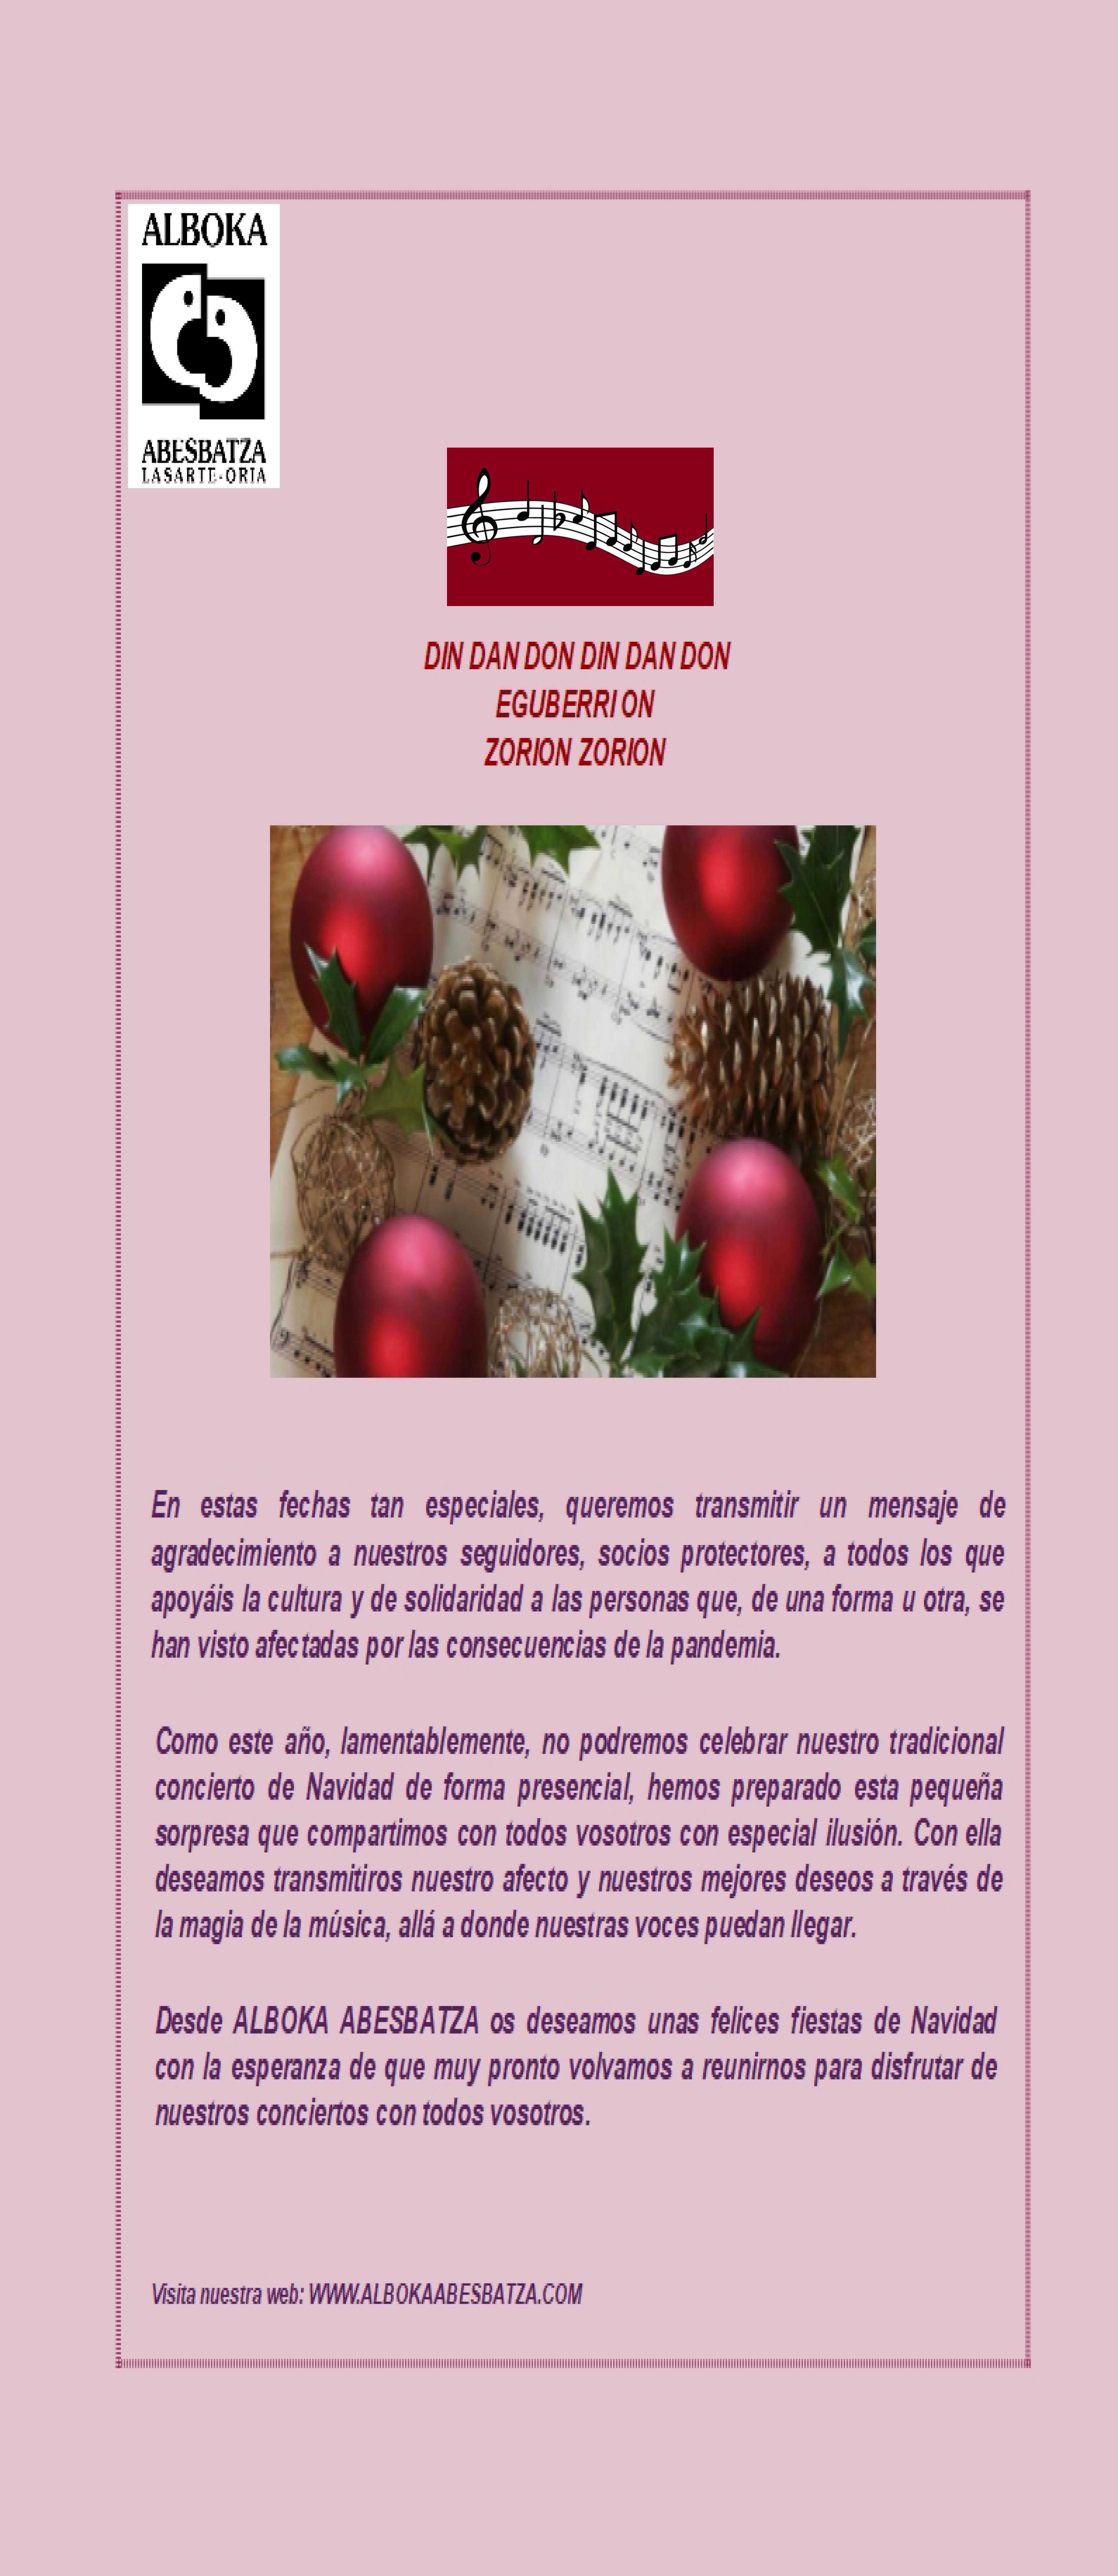 Alboka Navidad 2020 castellano